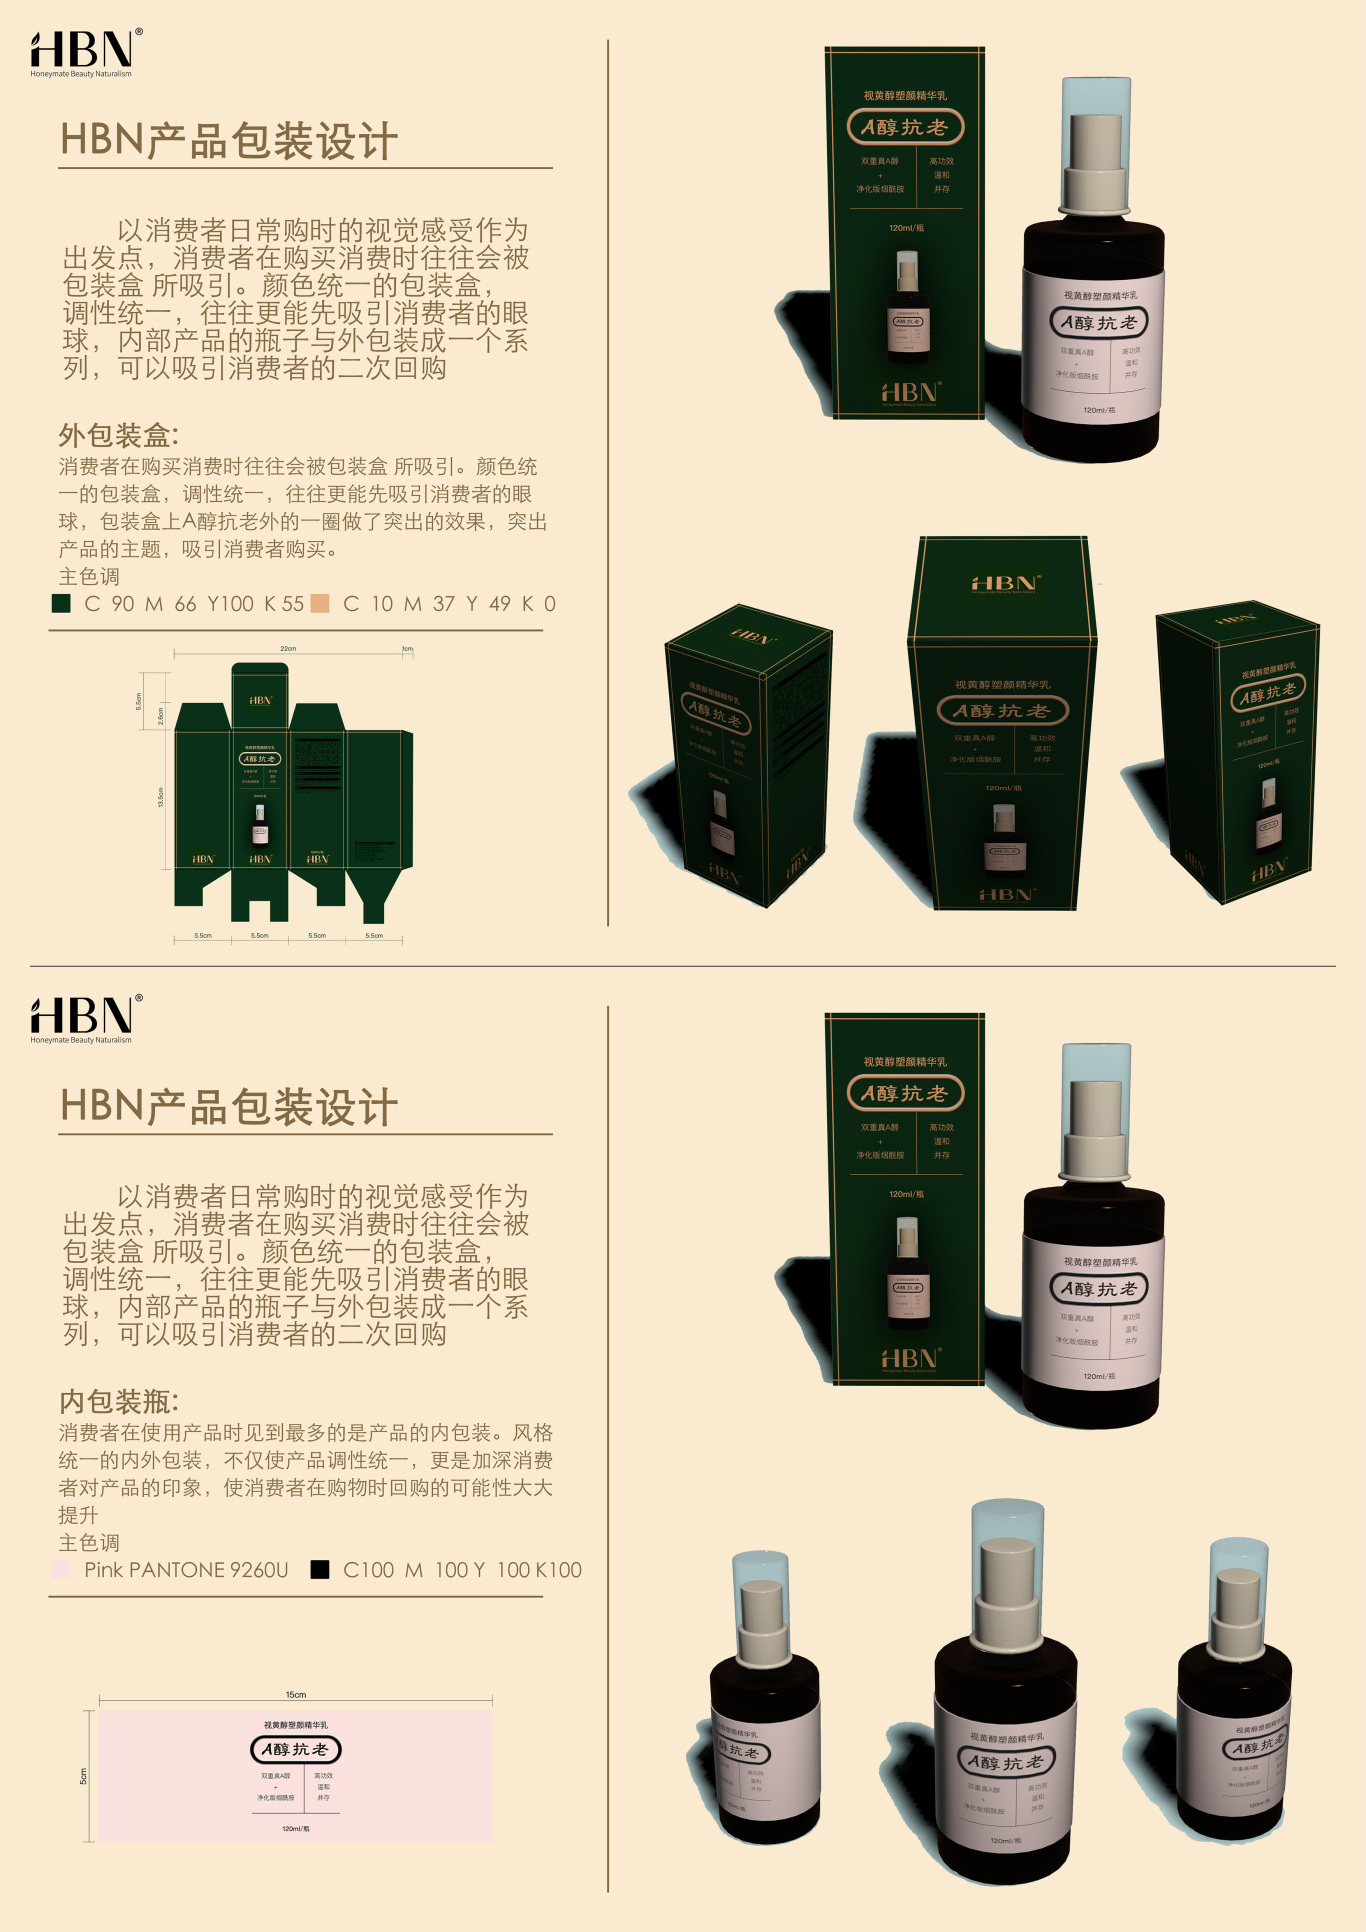 HBN抗老化妝品包裝設計圖2